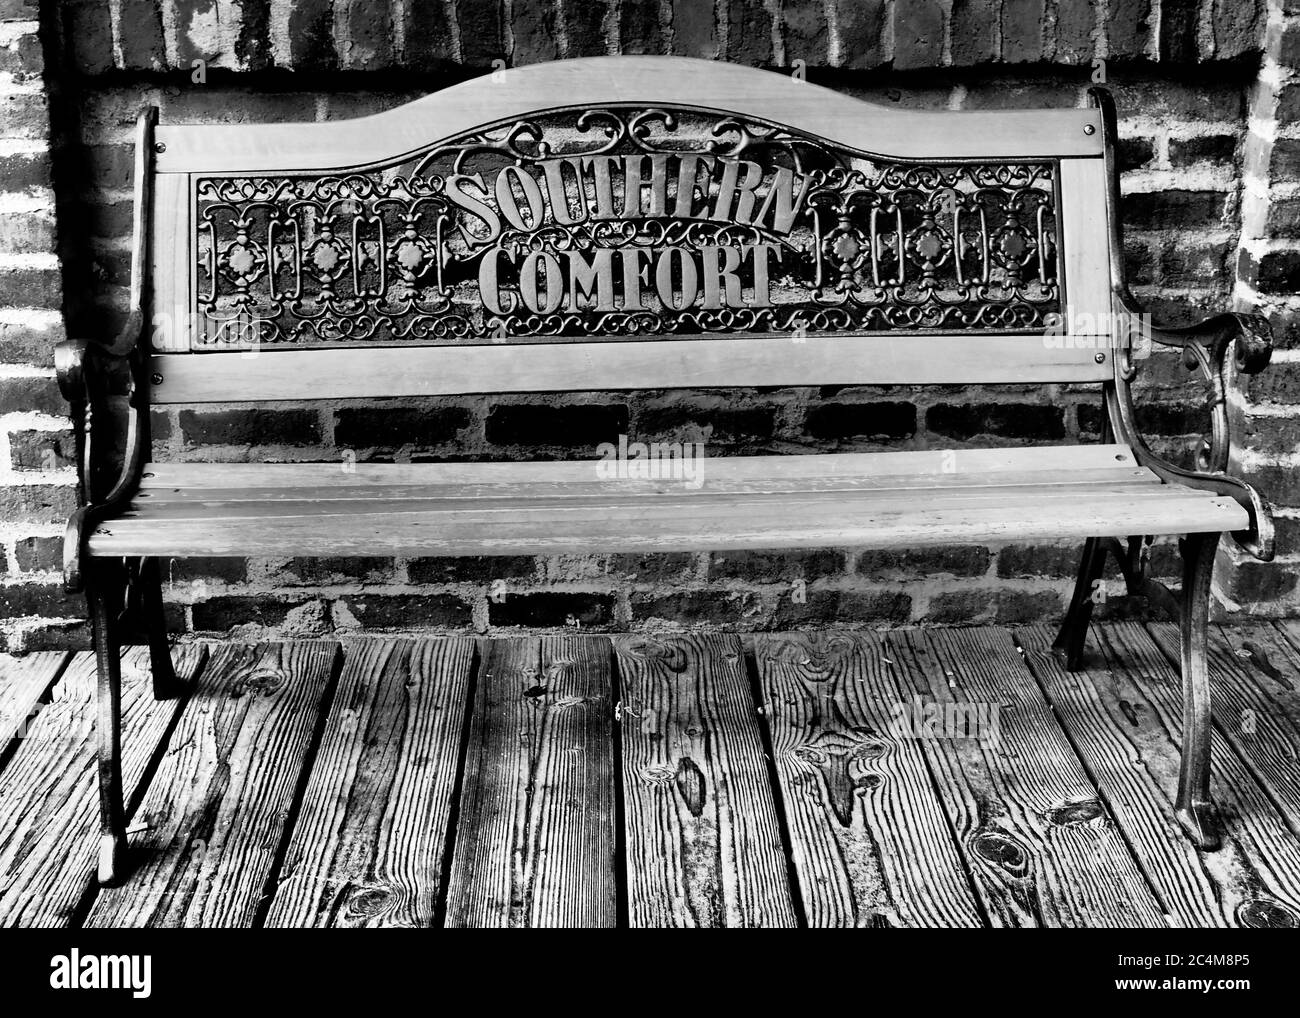 Una panca Southern Comfort all'esterno di una berlina. Foto Stock